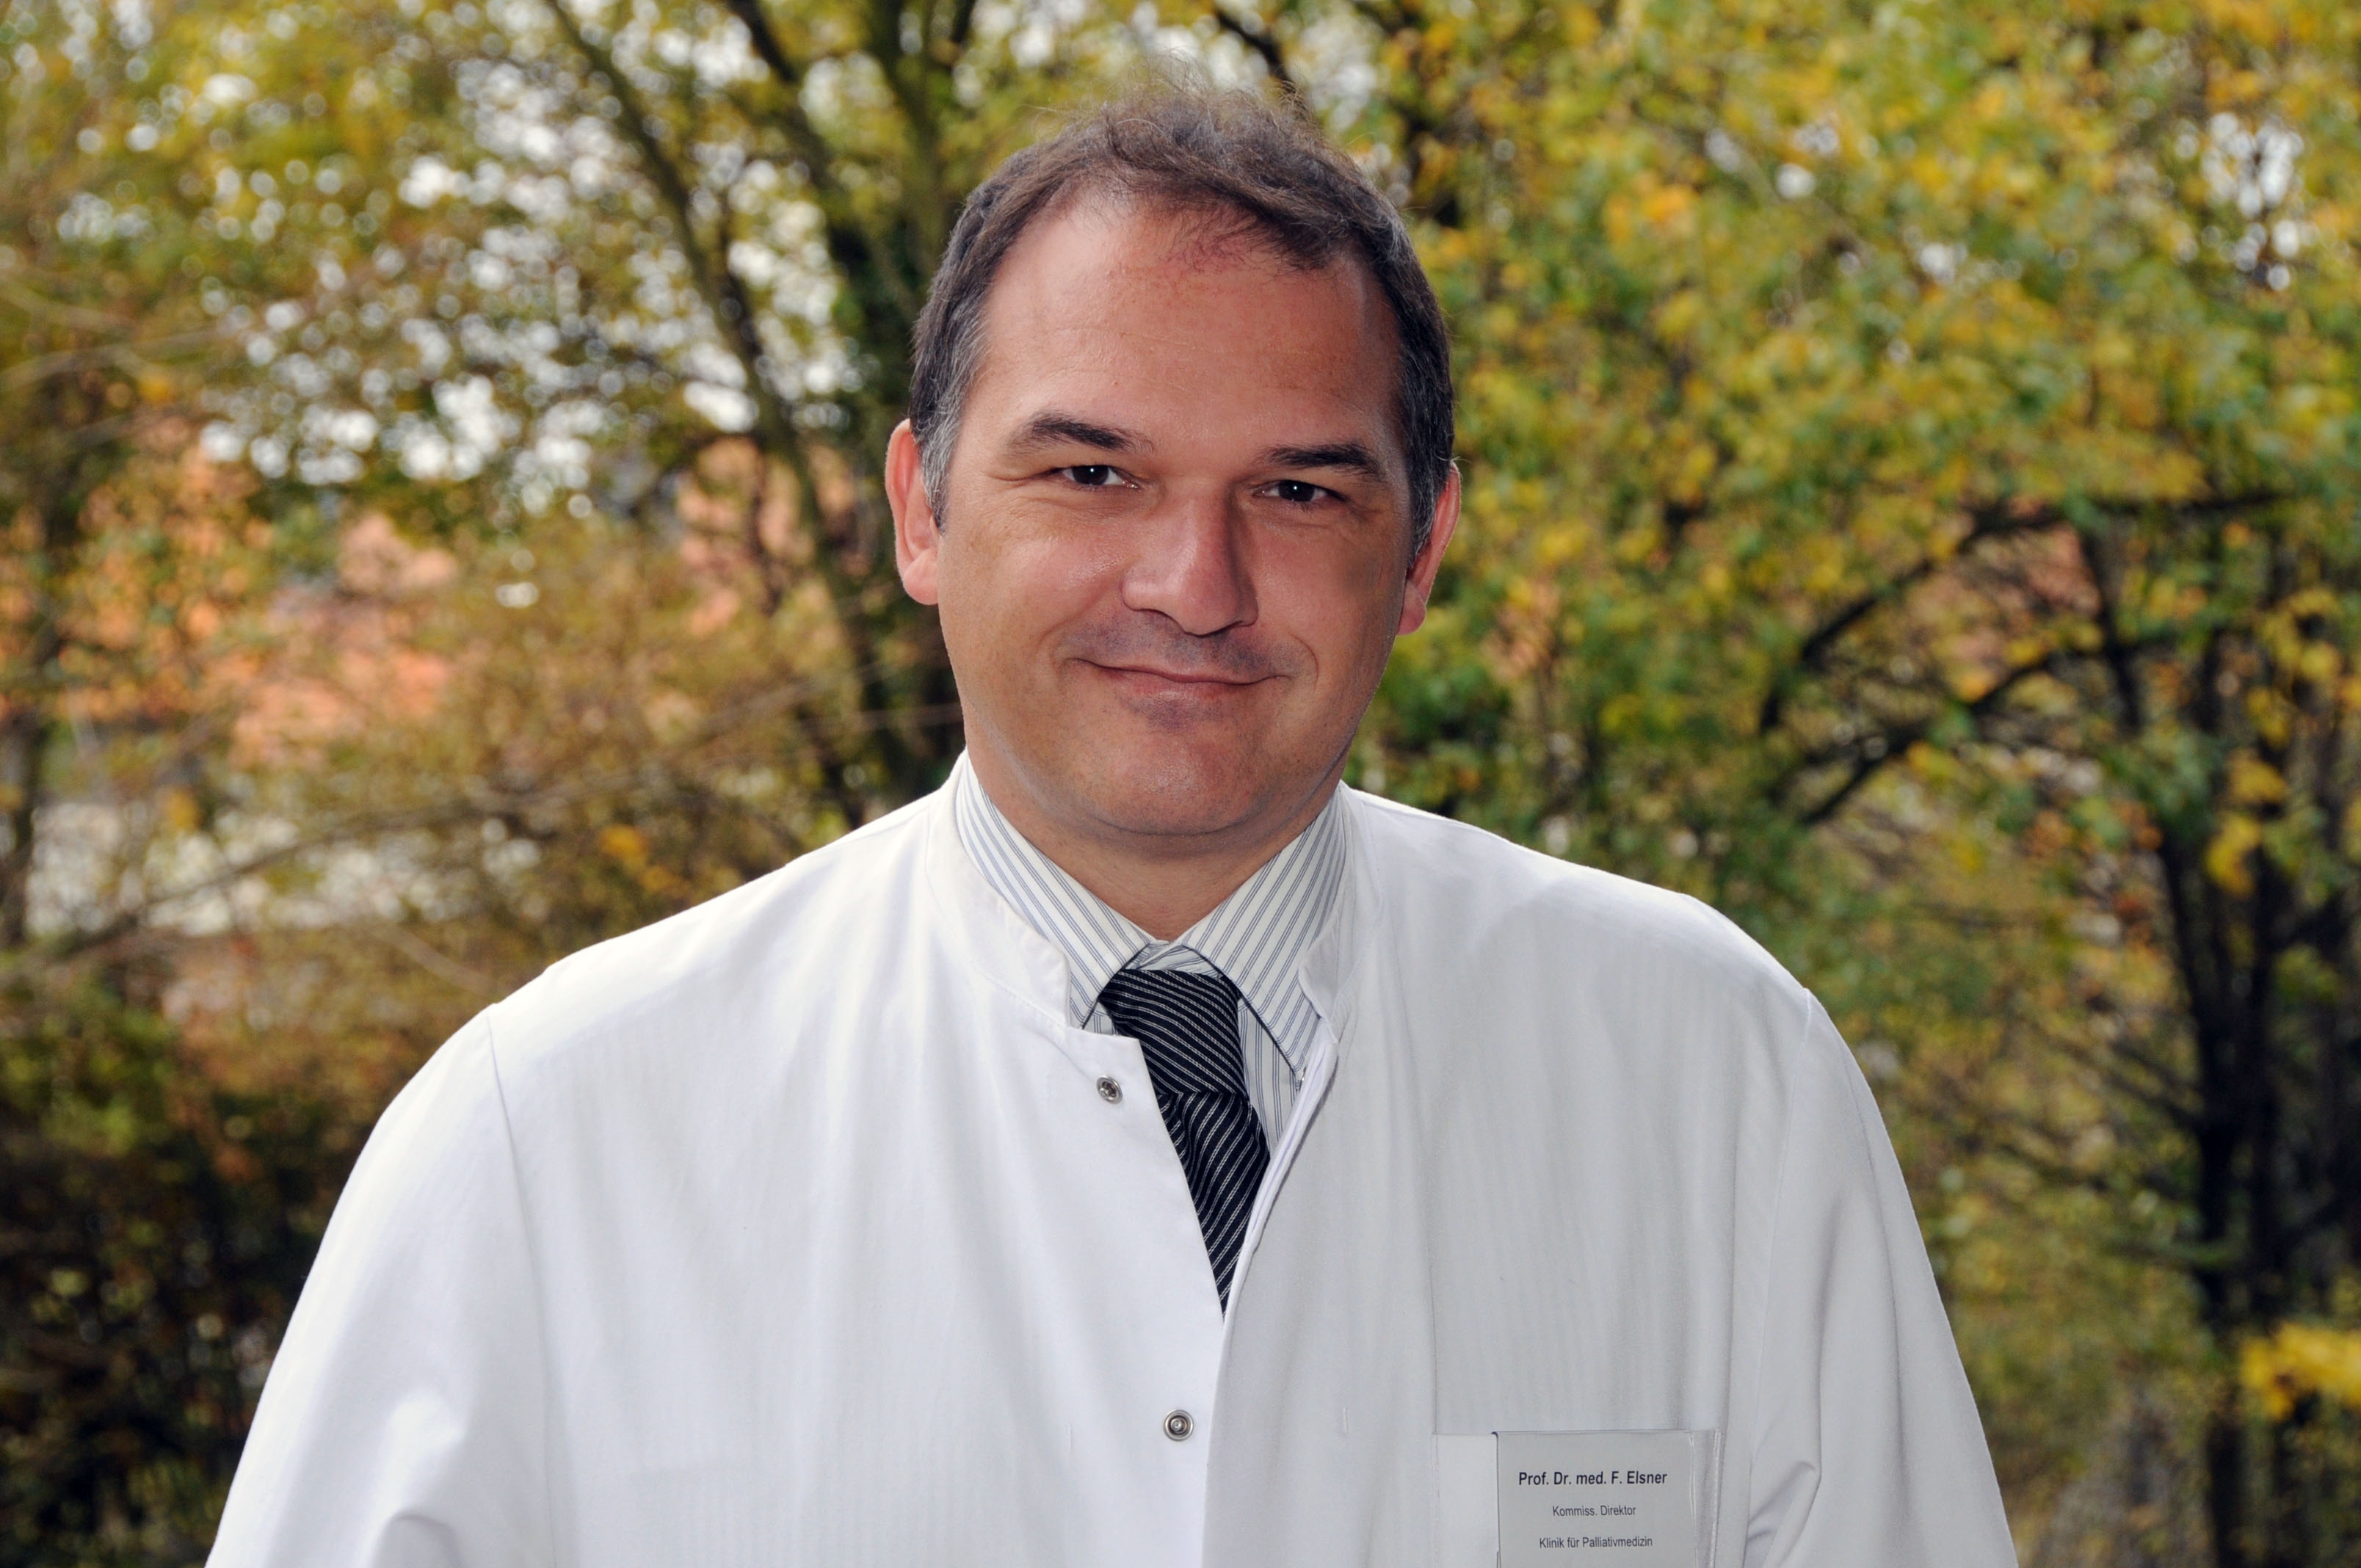 Prof. Dr. Frank Elsner  Palliative medicine specialist at Aachen University Hospital (Rheinisch-Westfälische Technische Hochschule, Aachen, Germany)